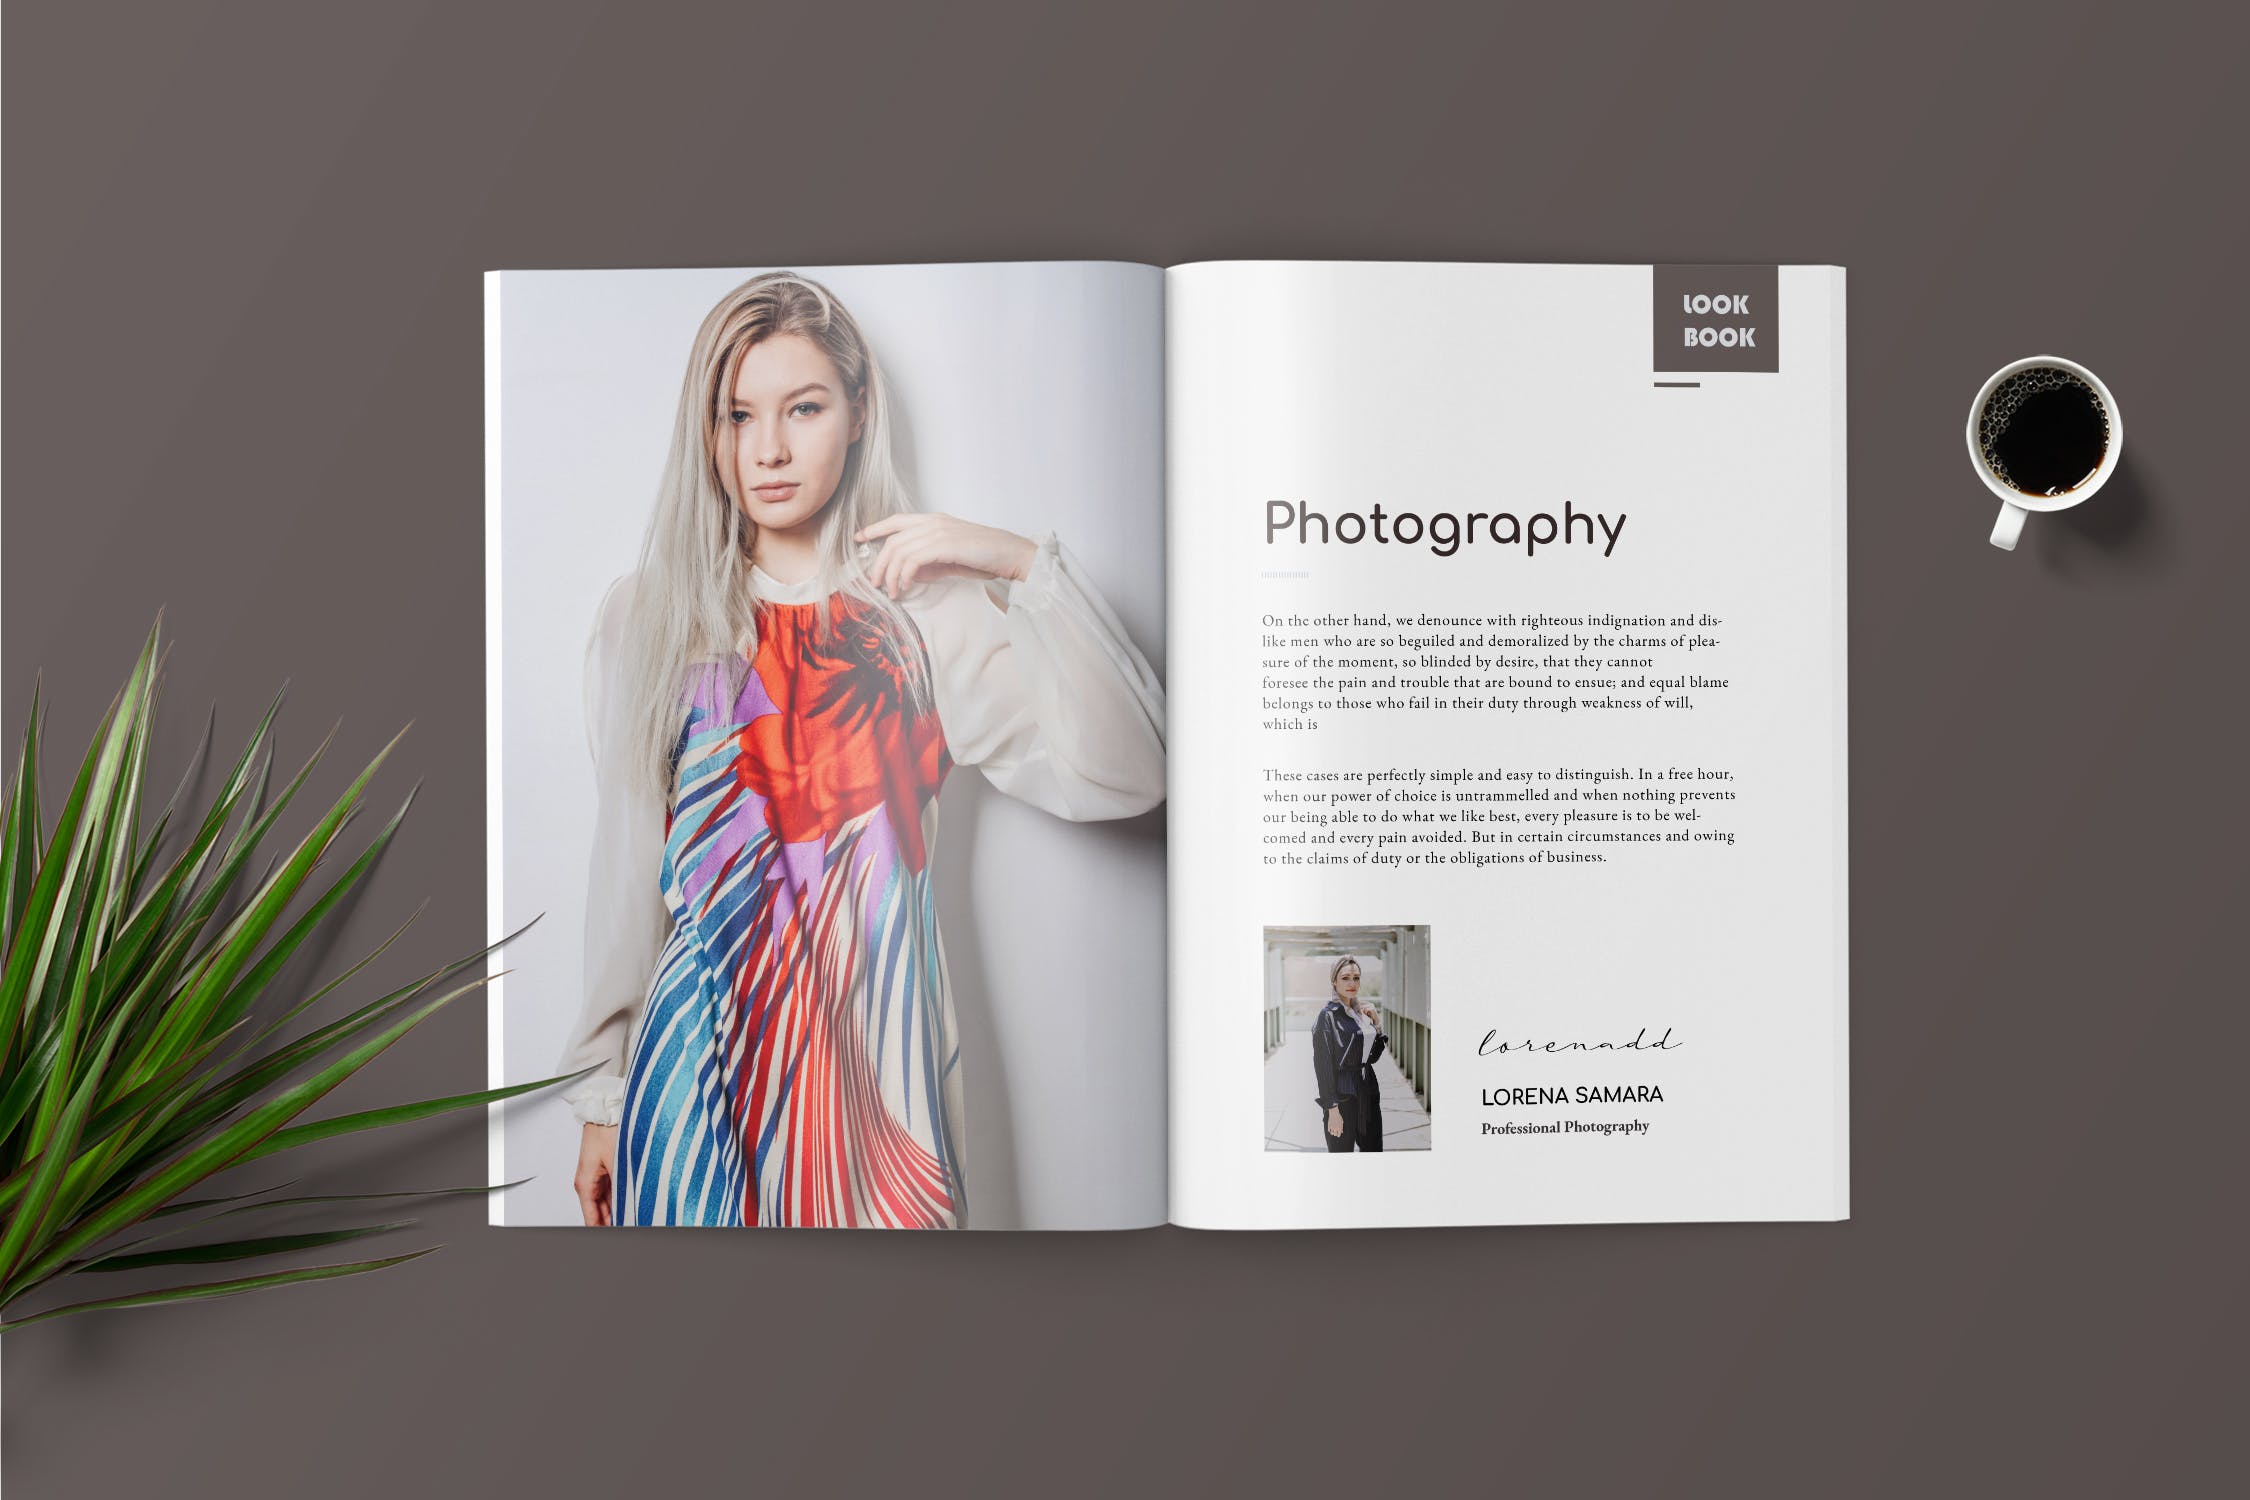 时尚服饰品牌产品画册/手册设计模板 Fashion Lookbook Catalogue插图(2)